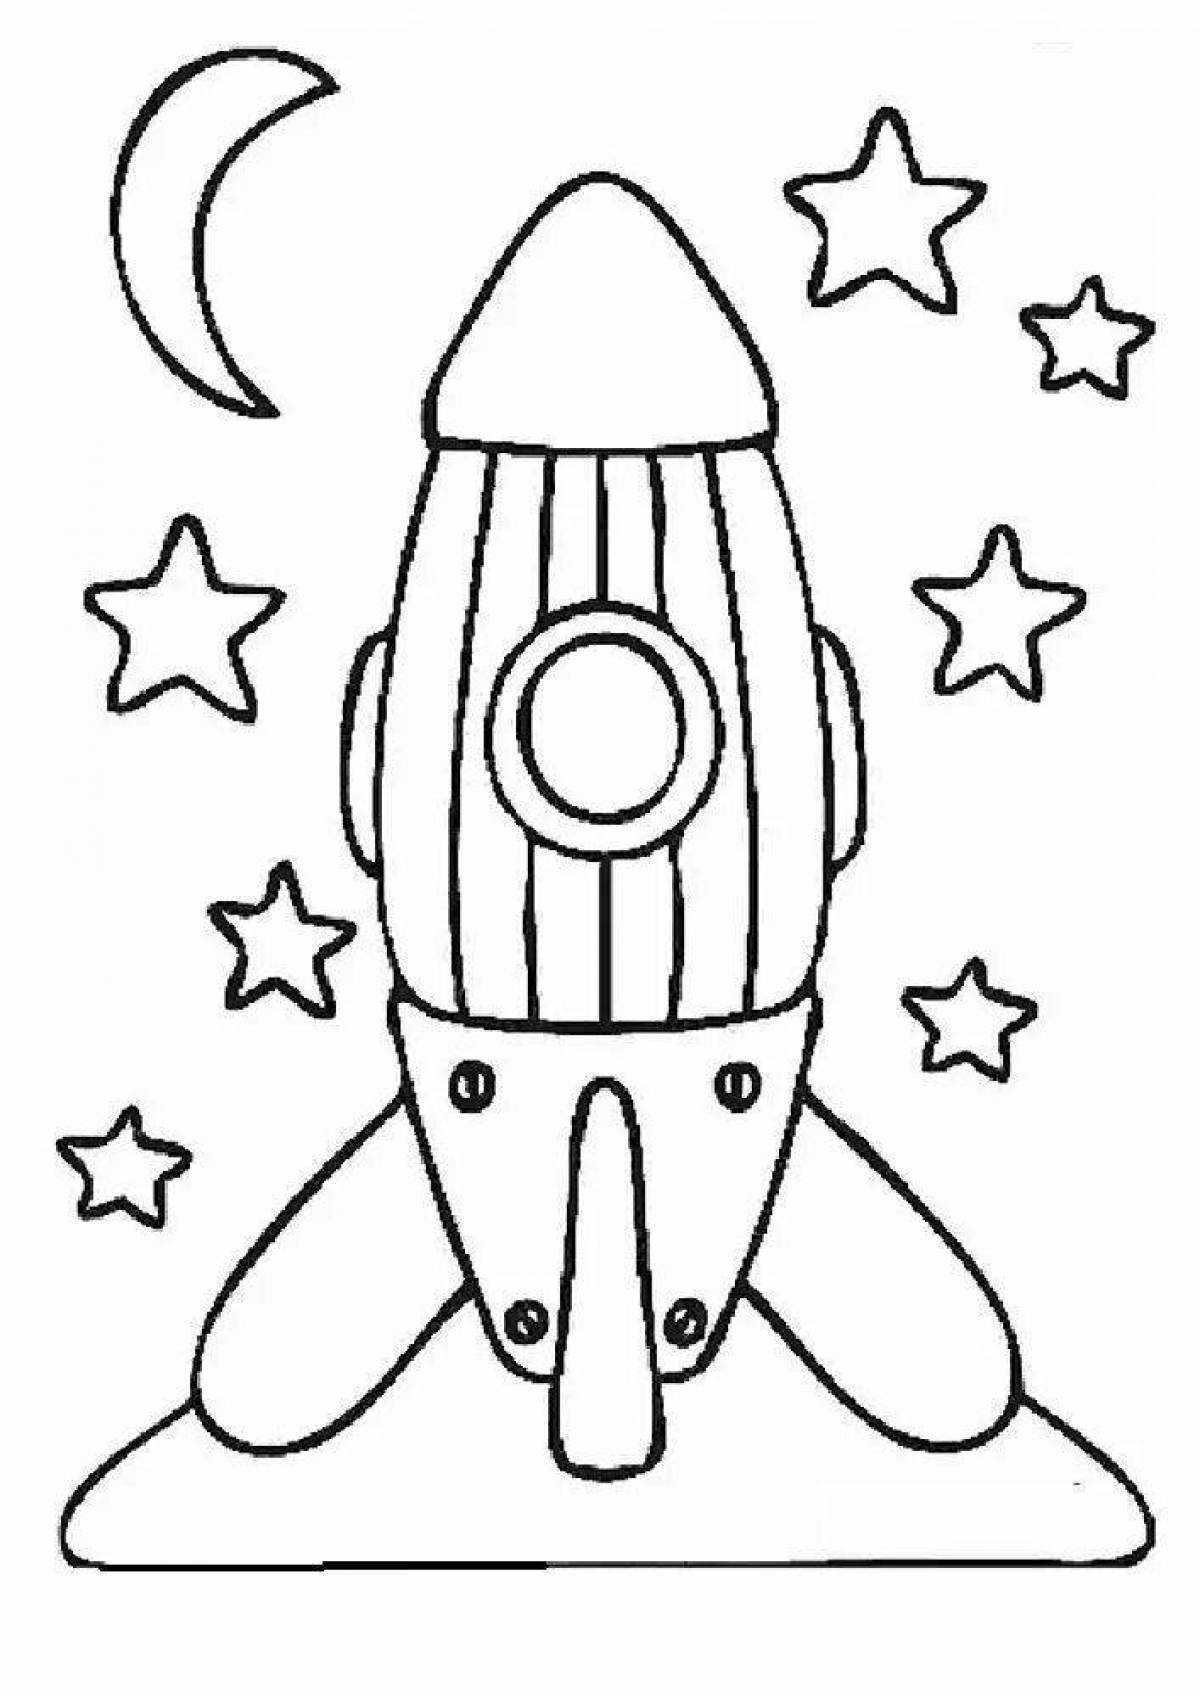 Fun rocket coloring for kids